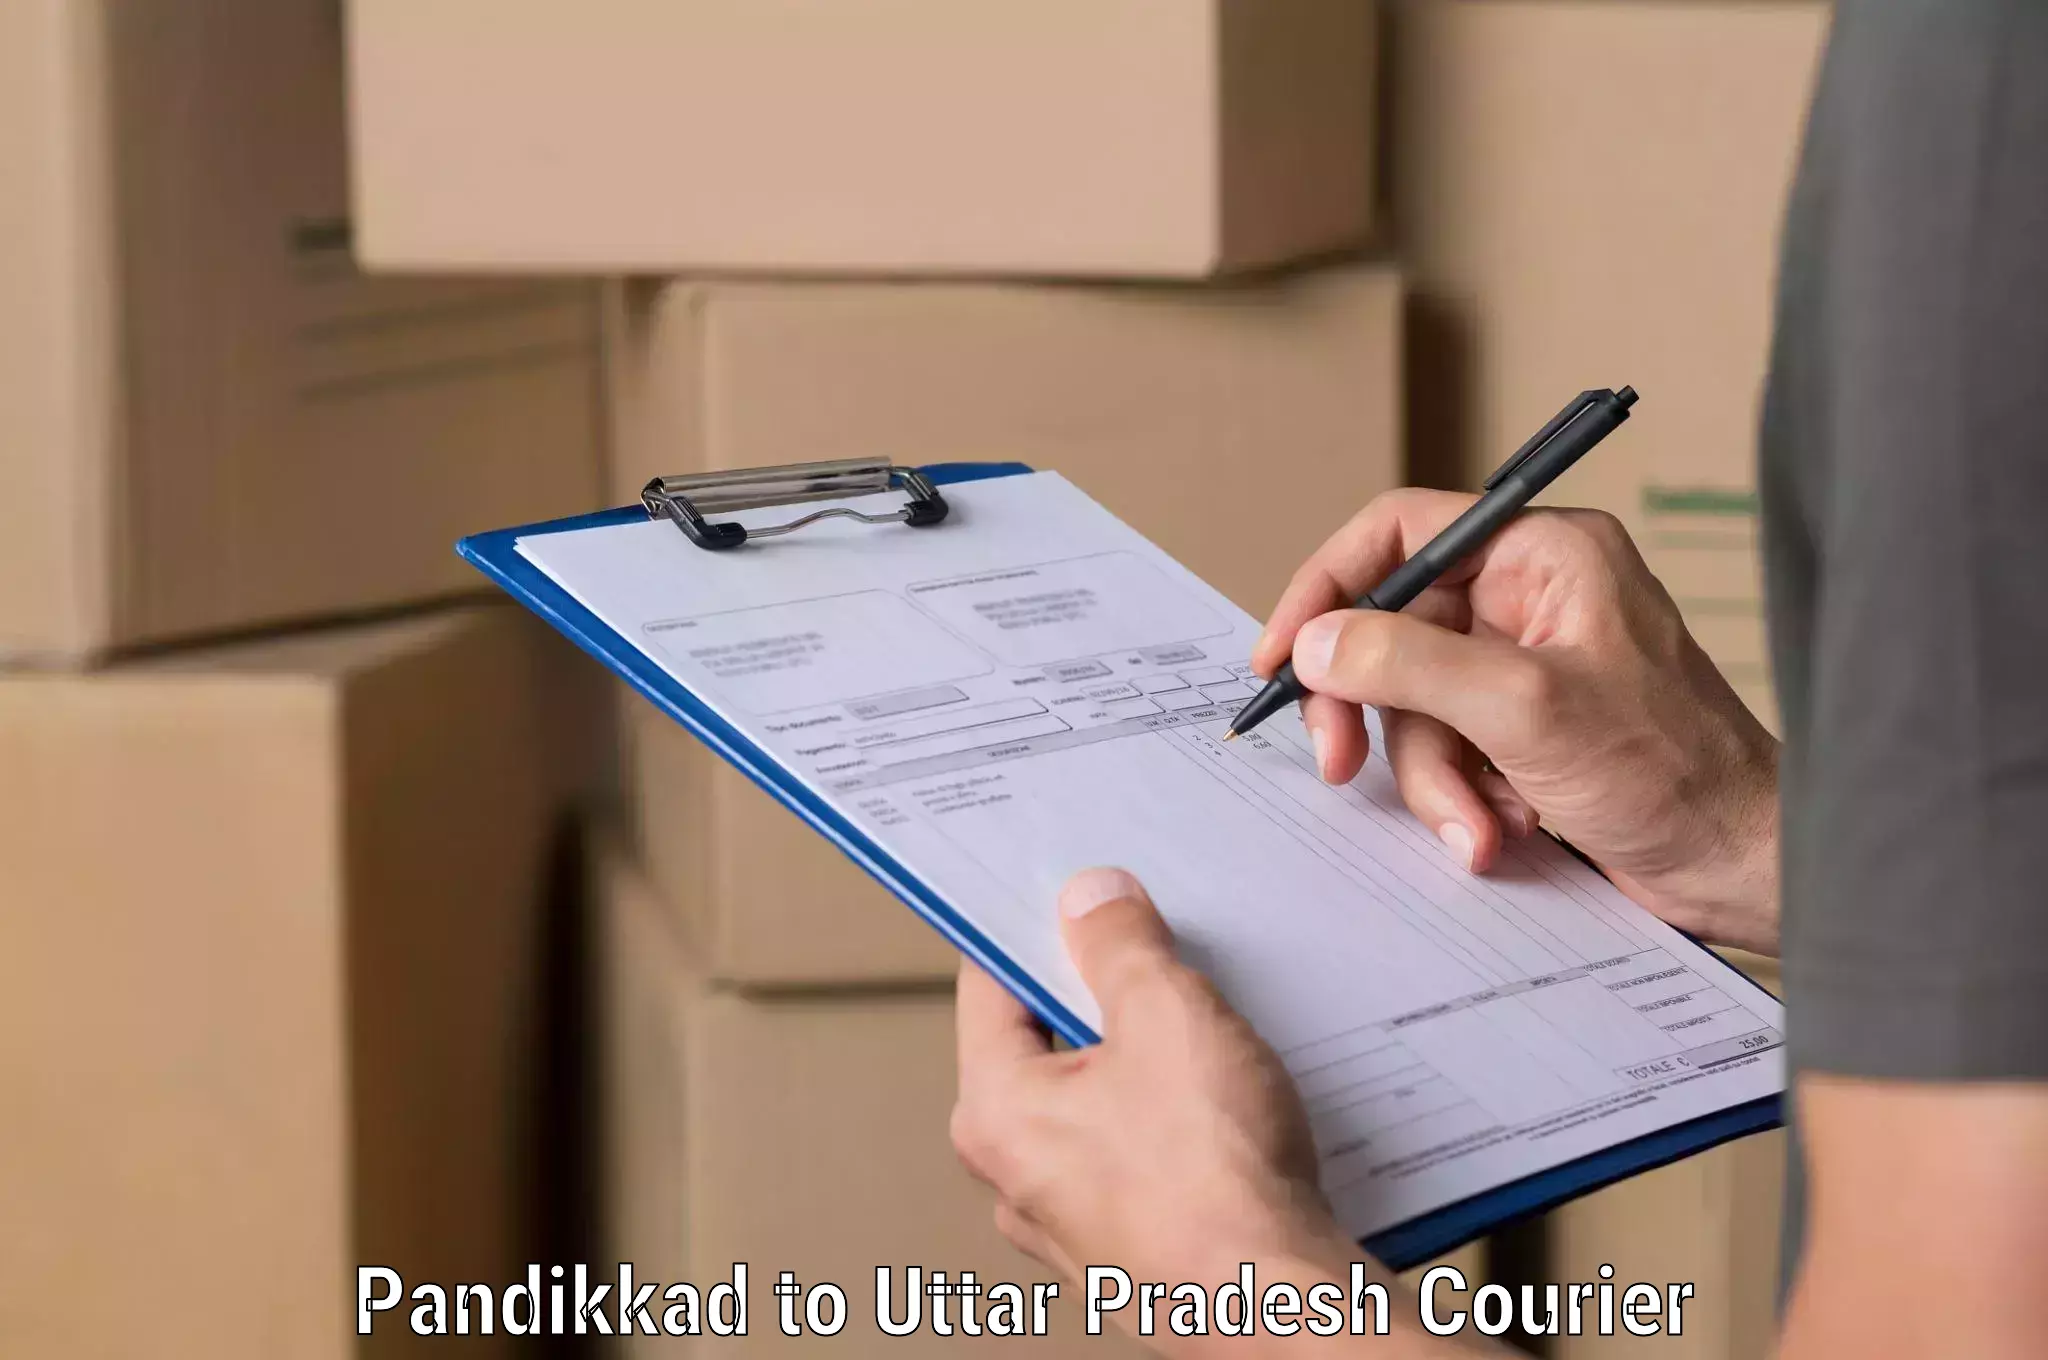 State-of-the-art courier technology Pandikkad to Chandwak